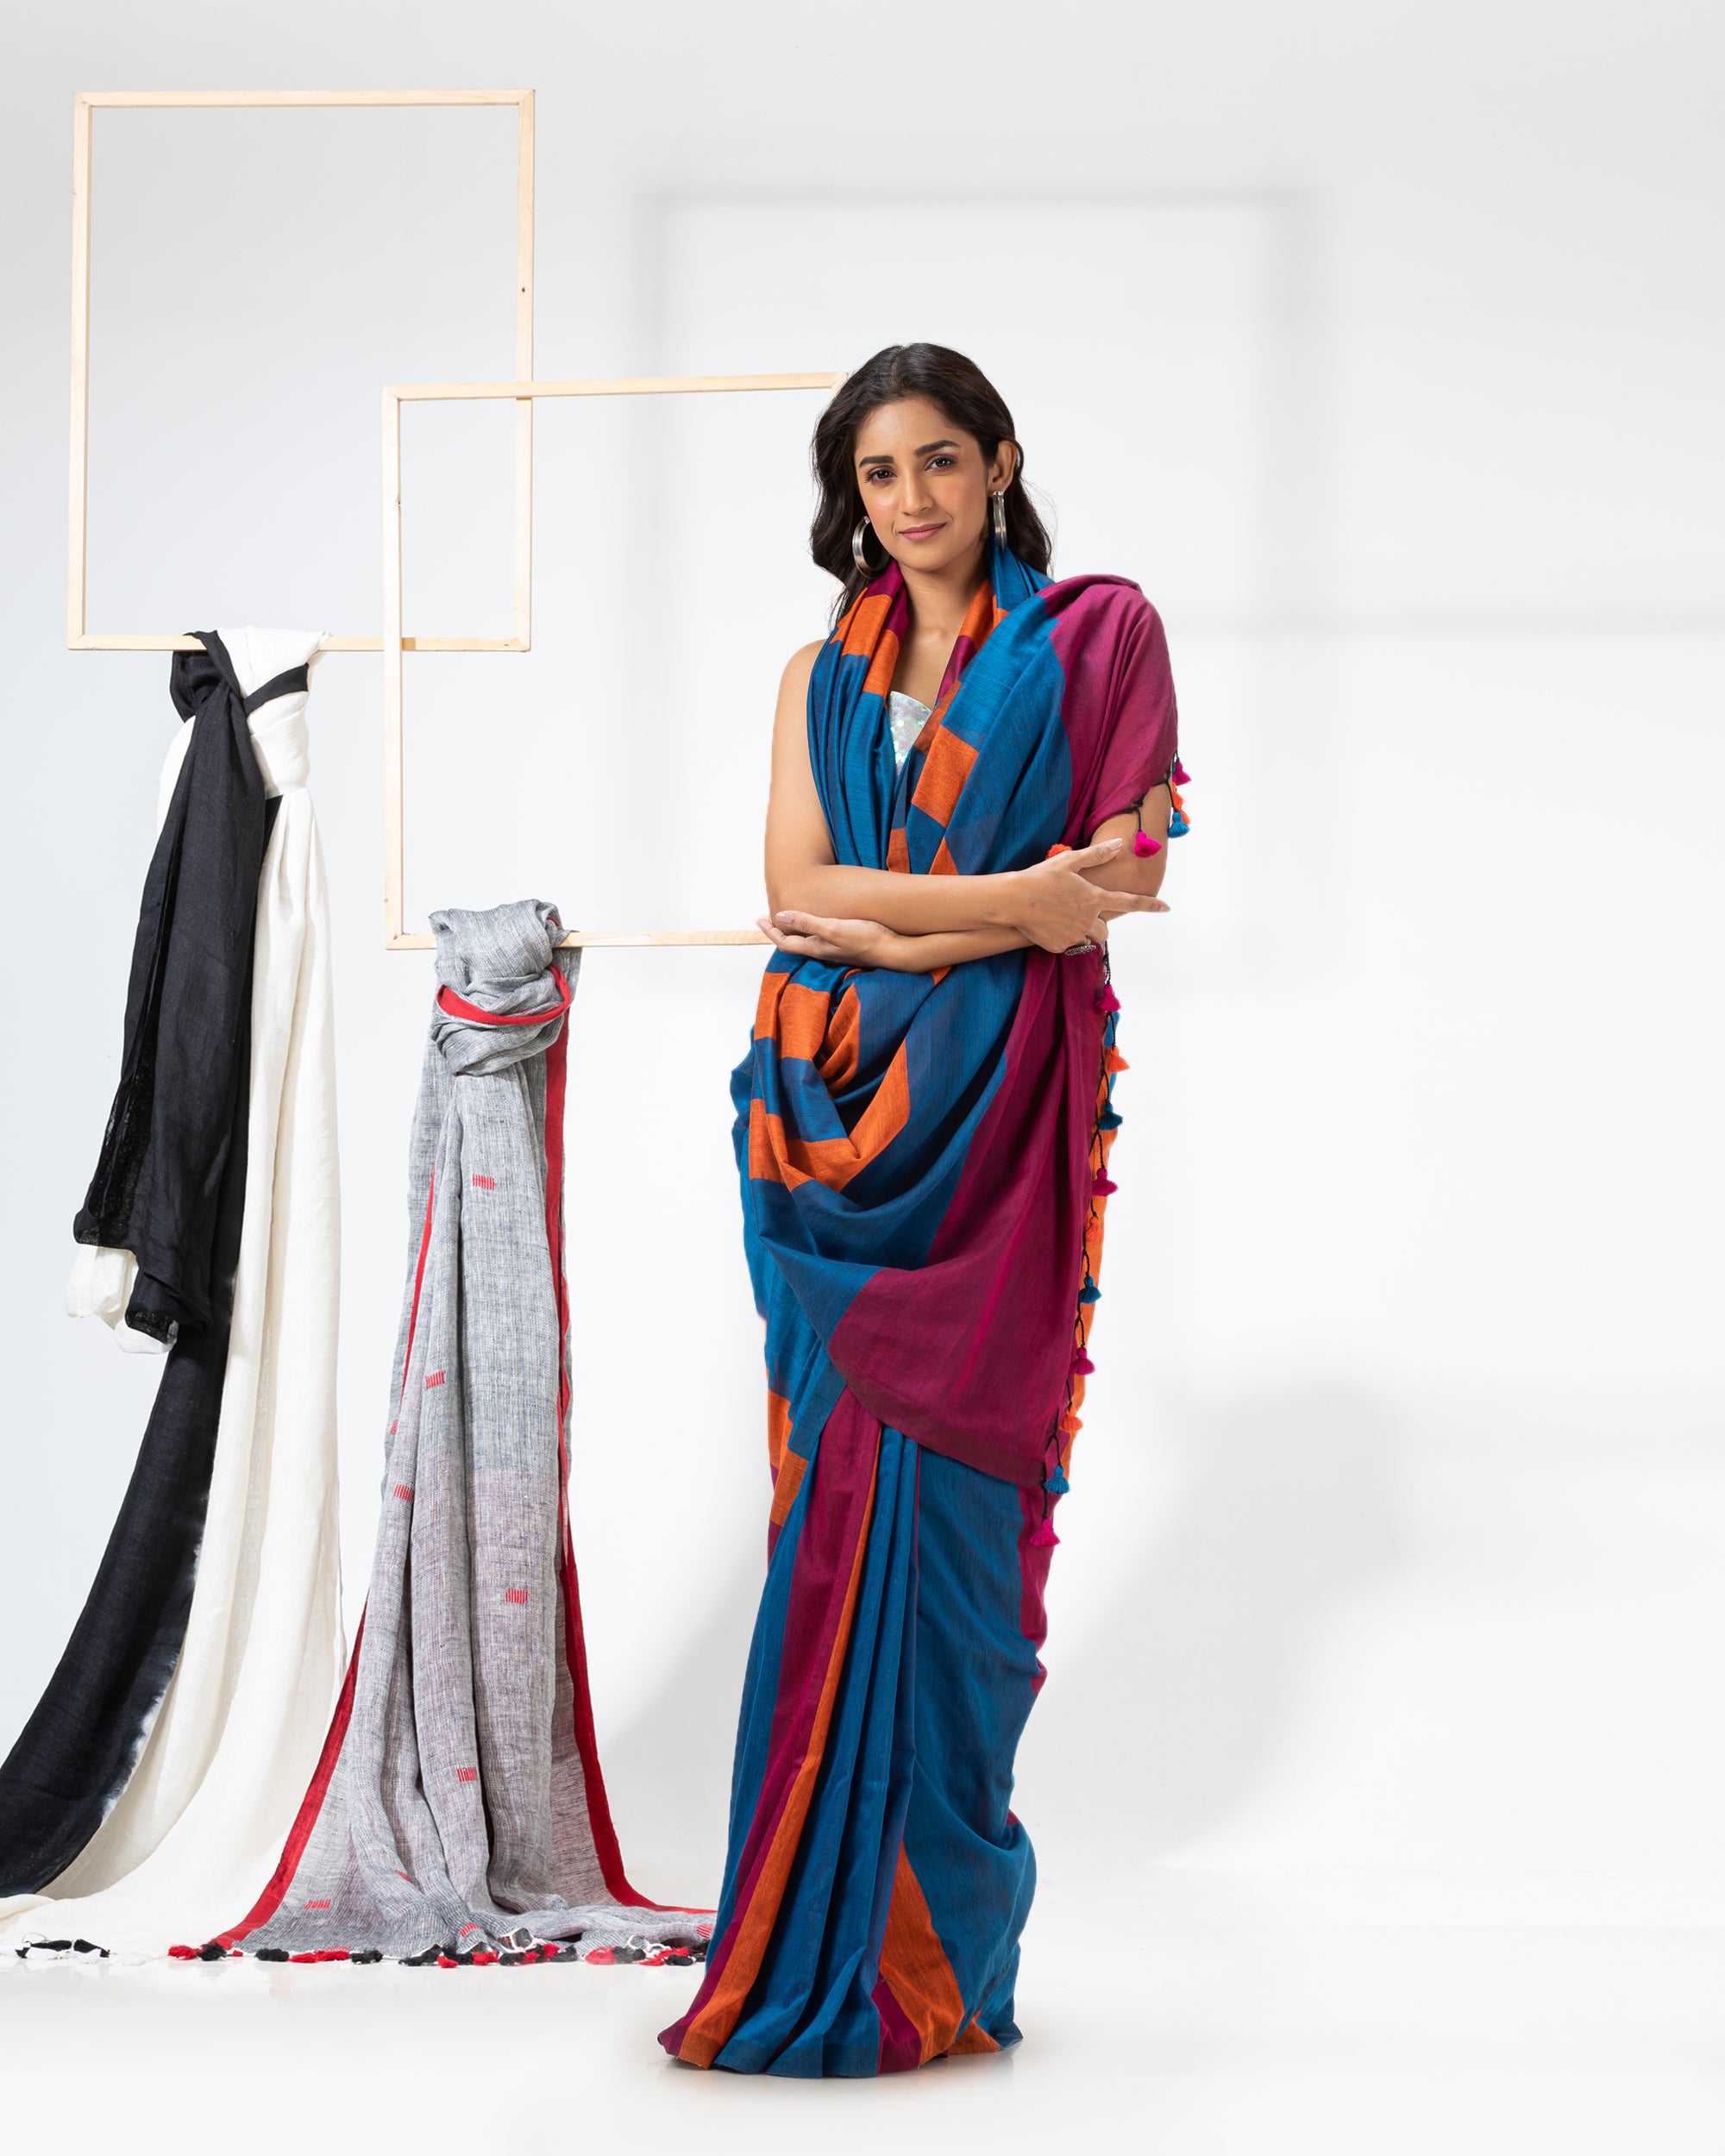 Women's Handspun Cotton Blue Handloom Saree - Piyari Fashion